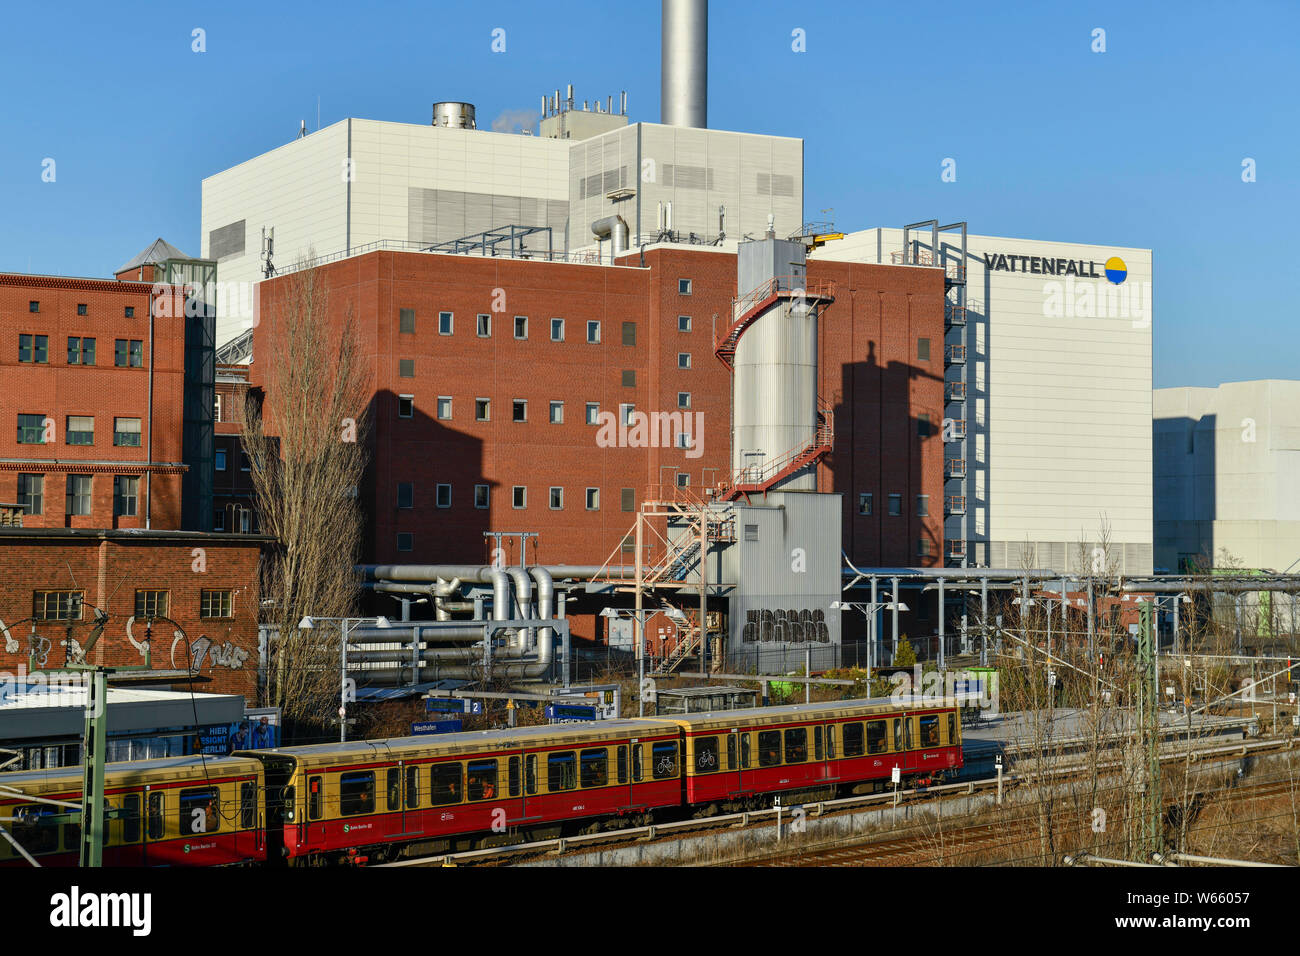 Heizkraftwerk Moabit, Friedrich-Krause-Ufer, Moabit, Berlin, Deutschland Banque D'Images